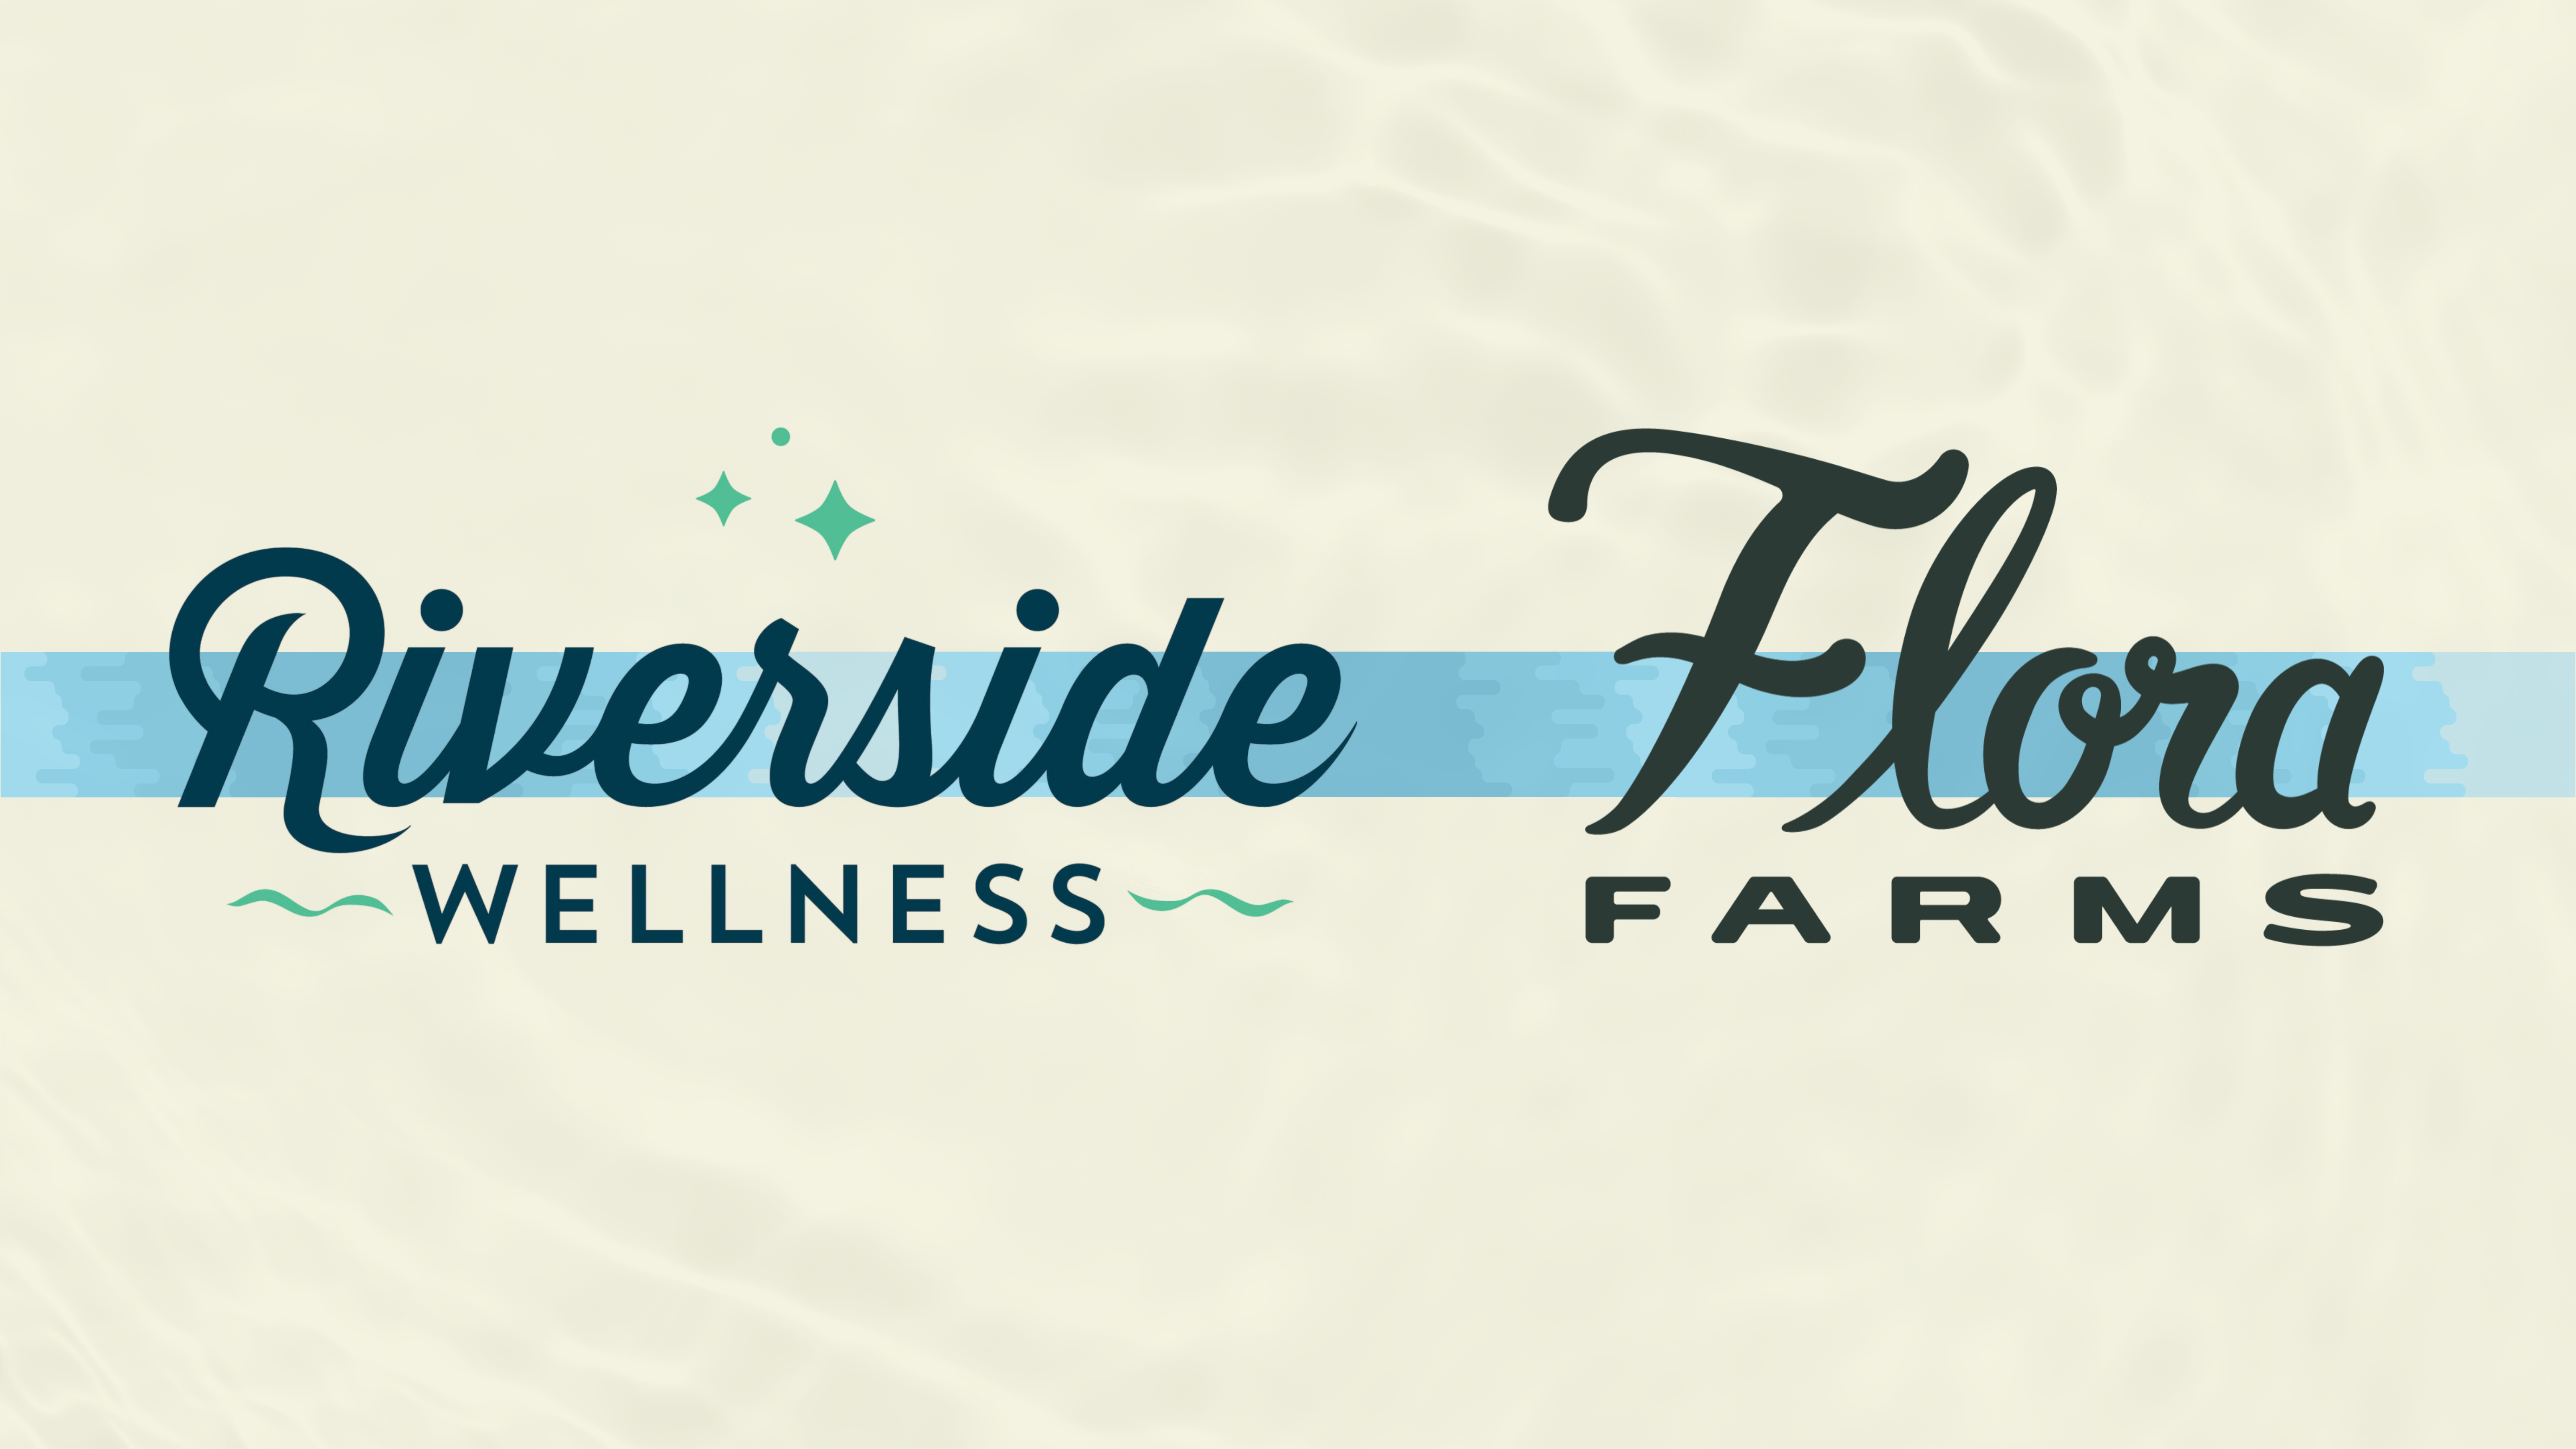 Riverside Wellness Press Release